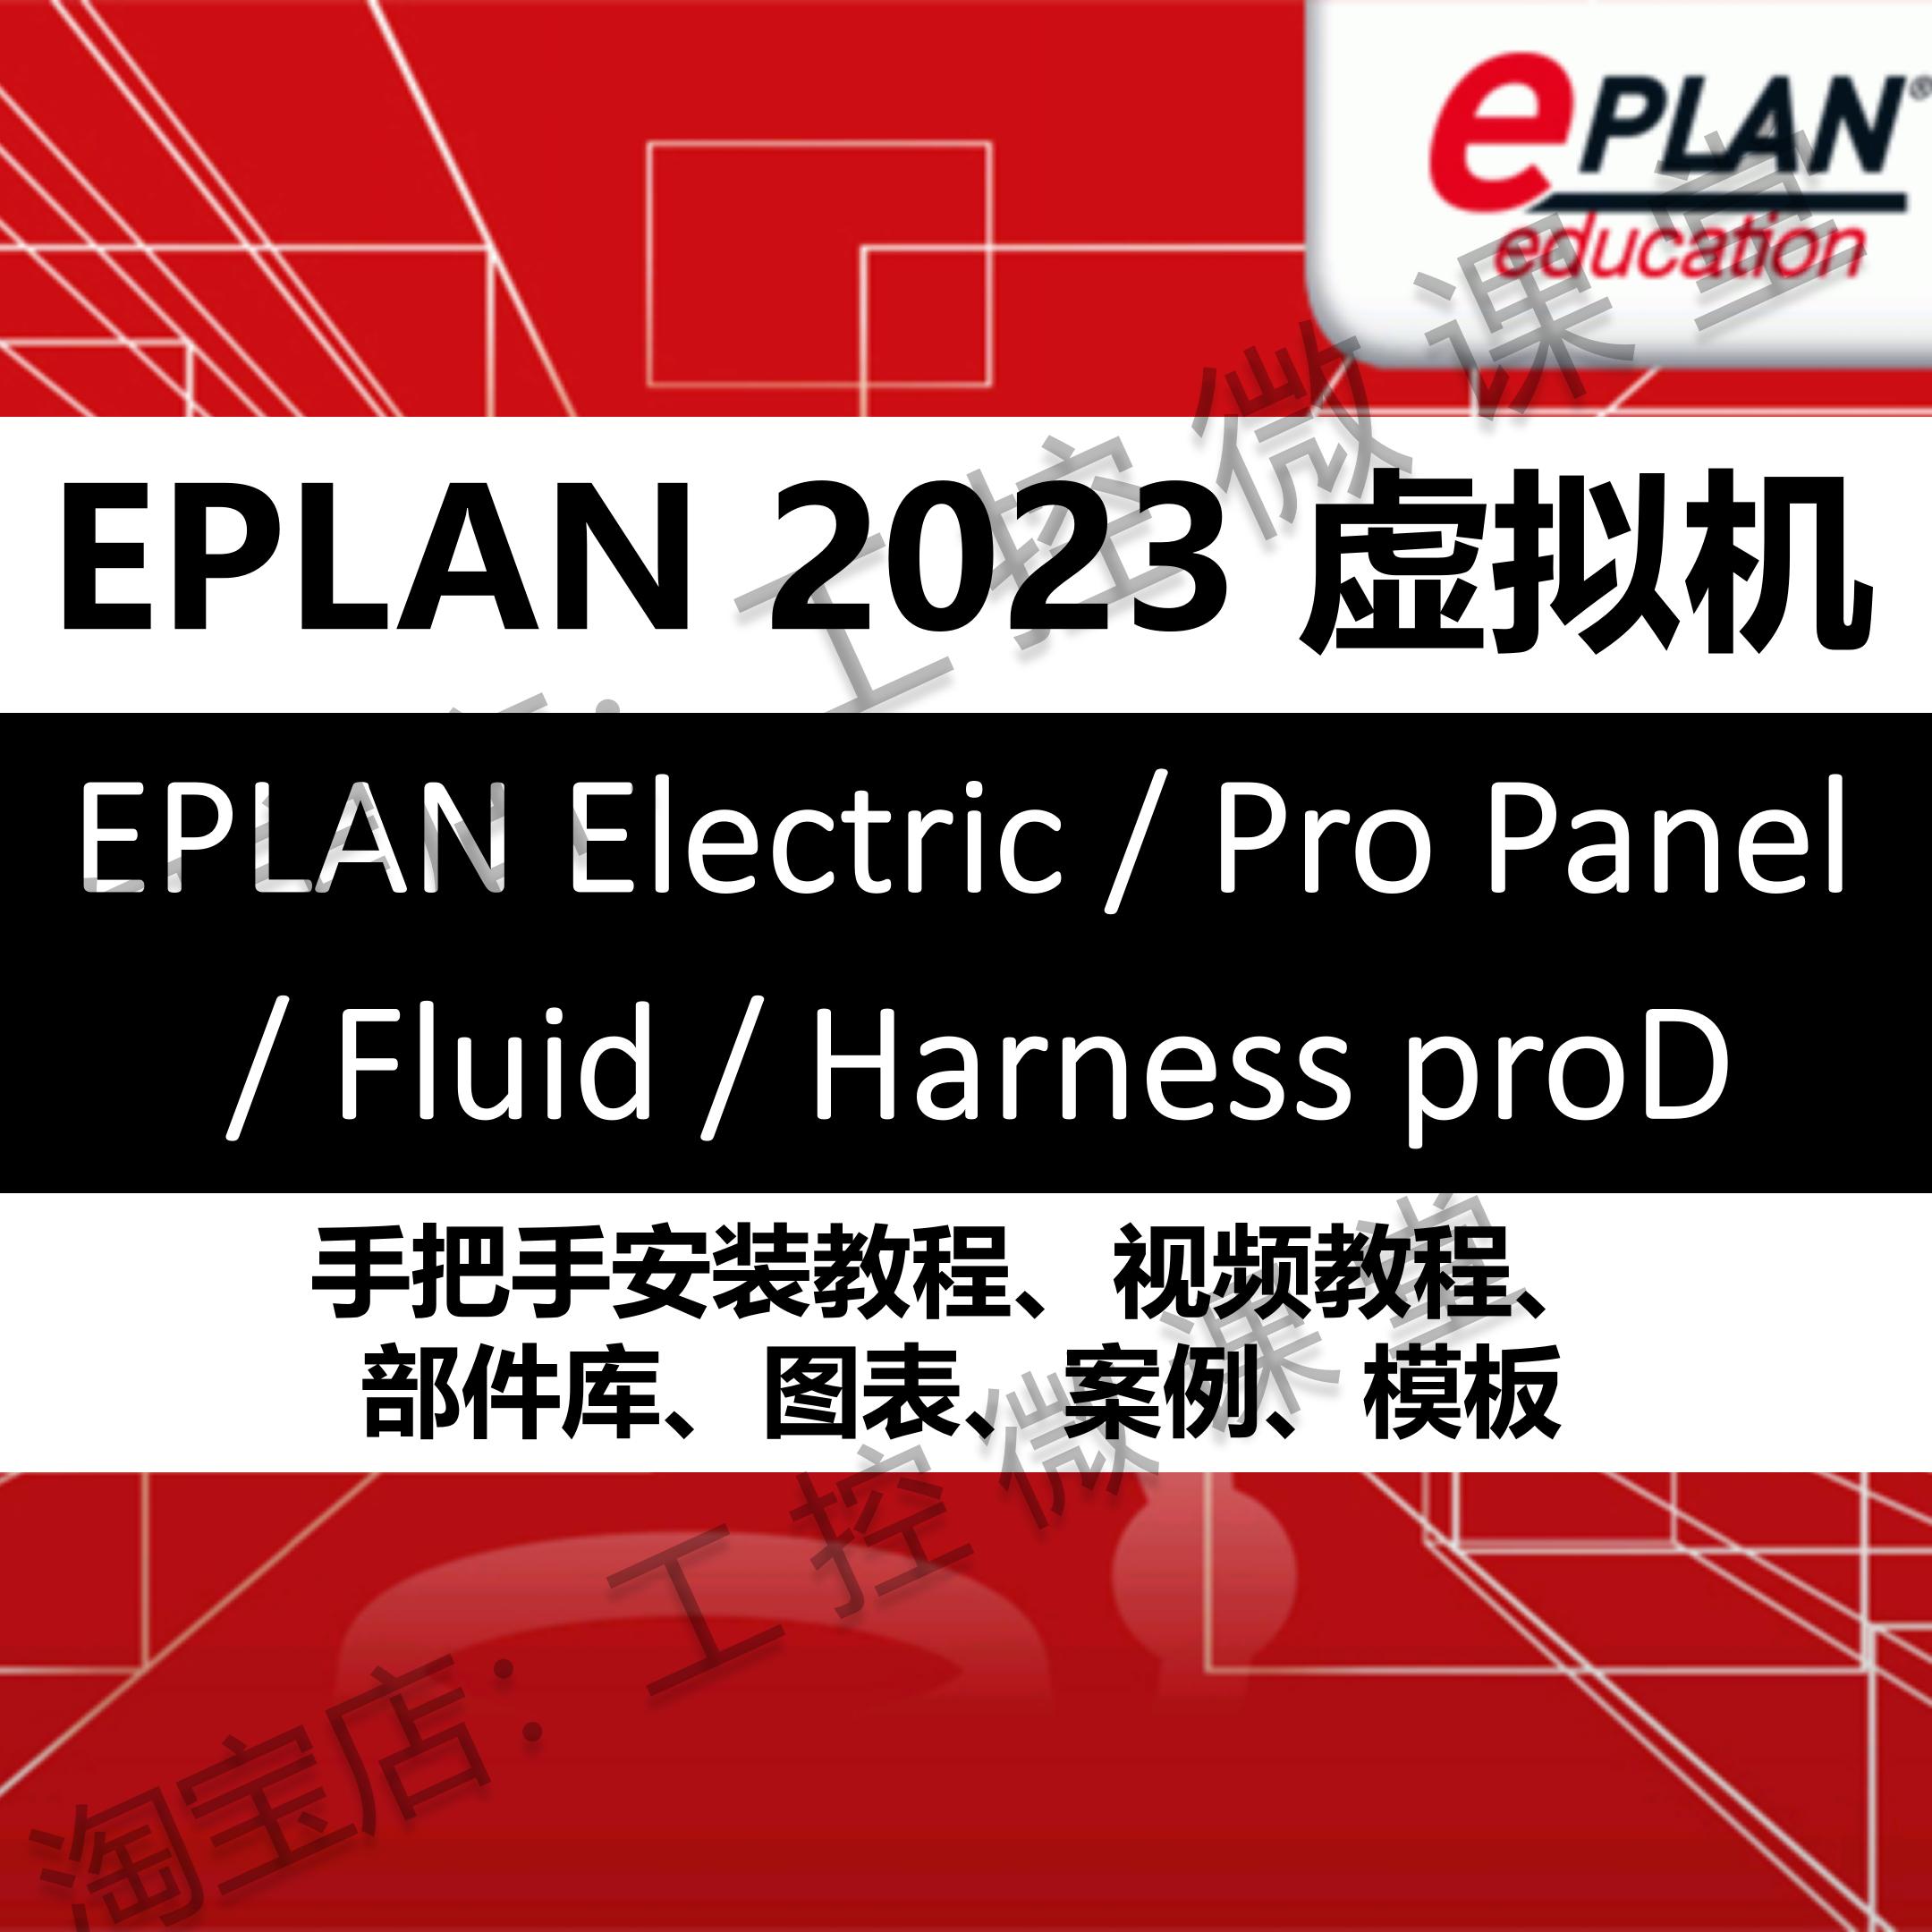 EPLAN Electric/Fluid/ProPanel/Harness proD 2023 EPLAN 虚拟机 教育培训 新职业就业培训 原图主图